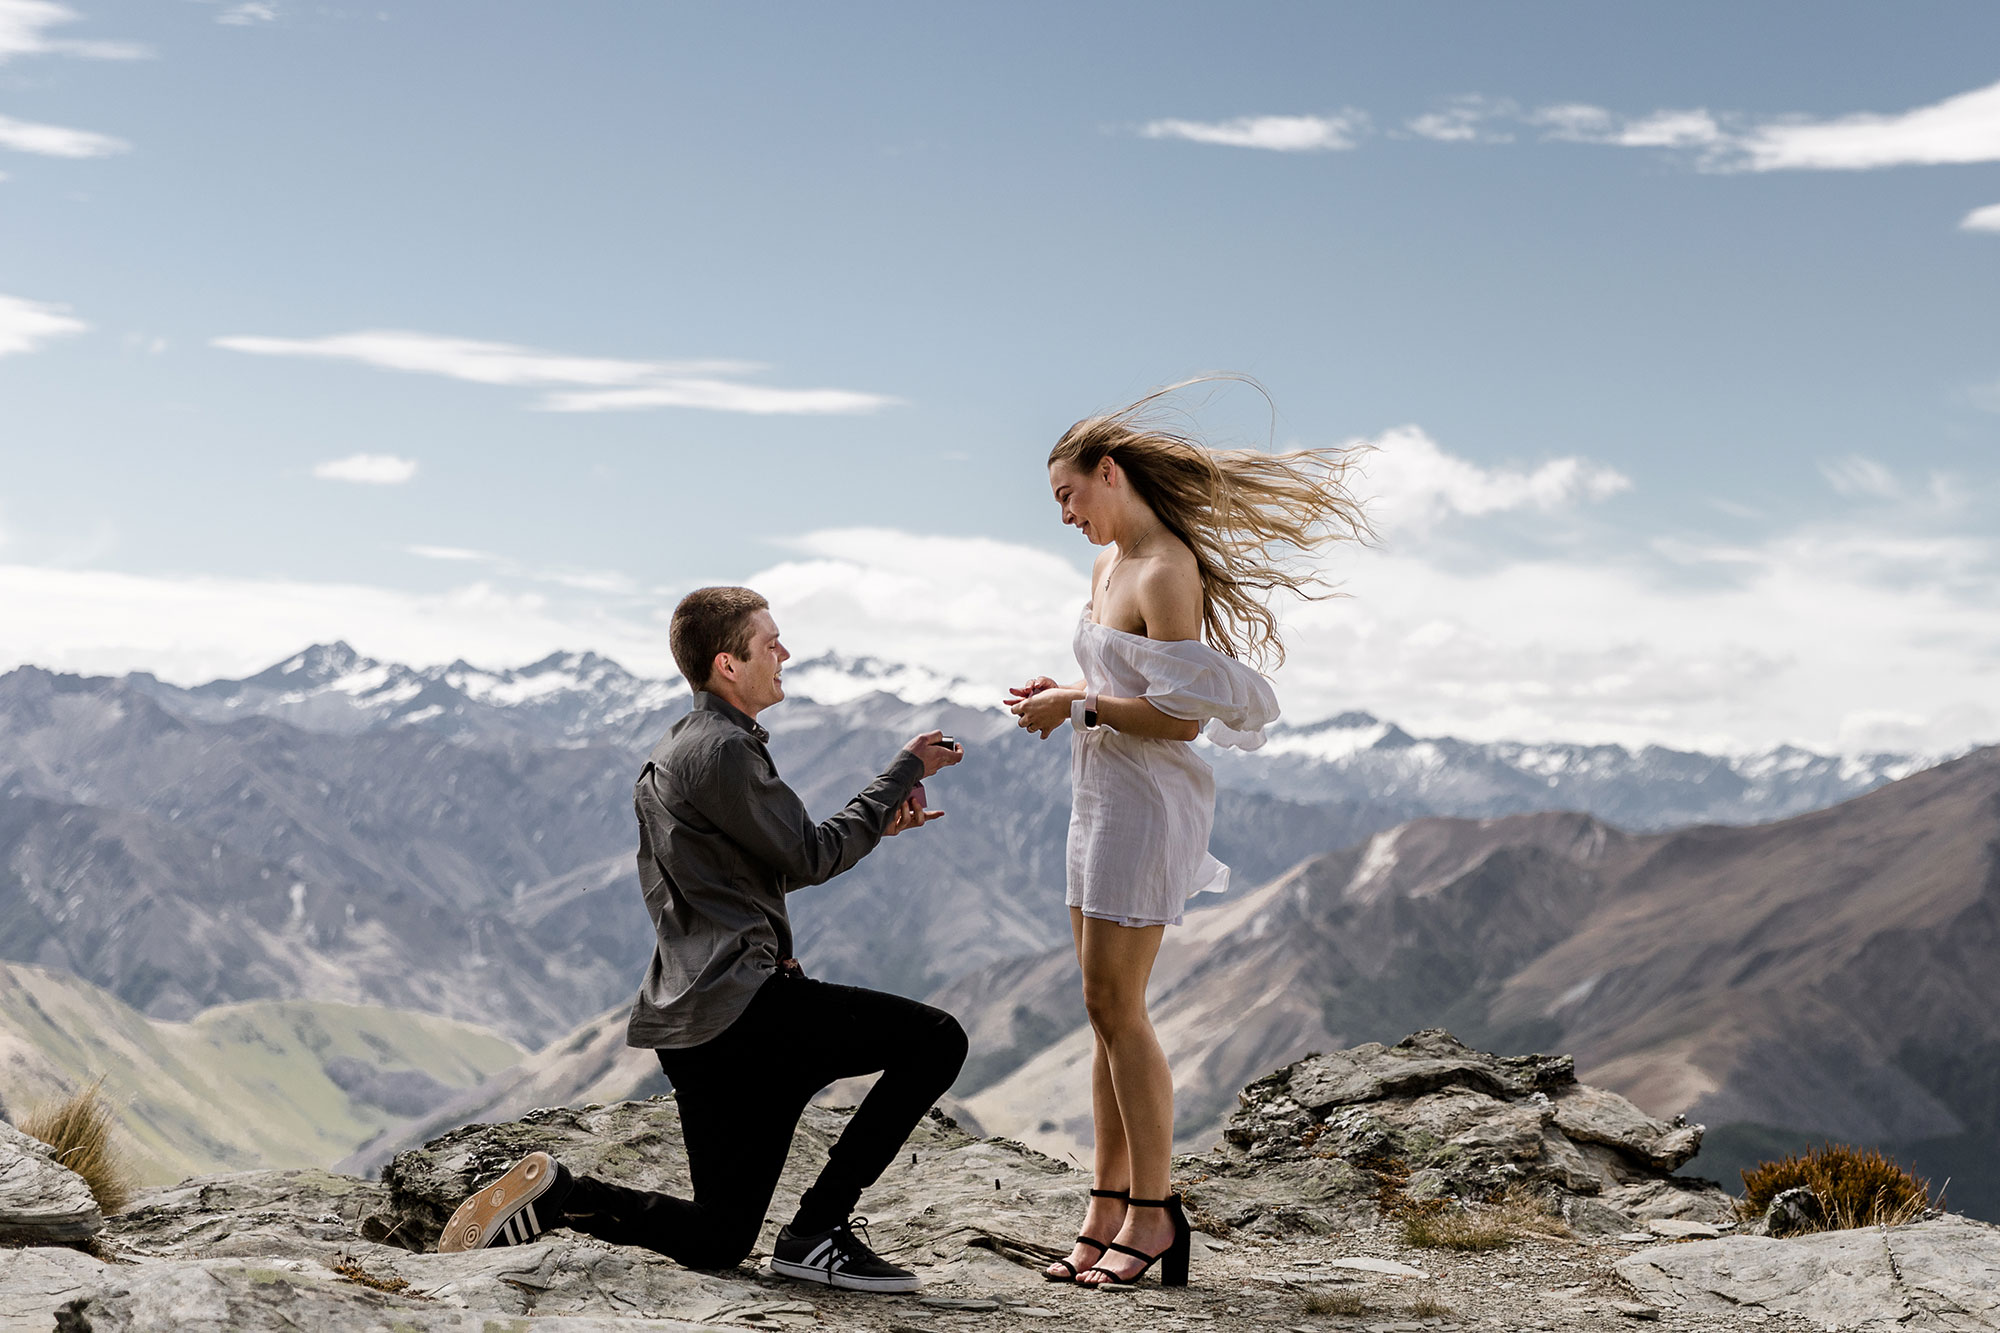 Cam & Darbe surprise proposal at The Ledge, Cecil Peak